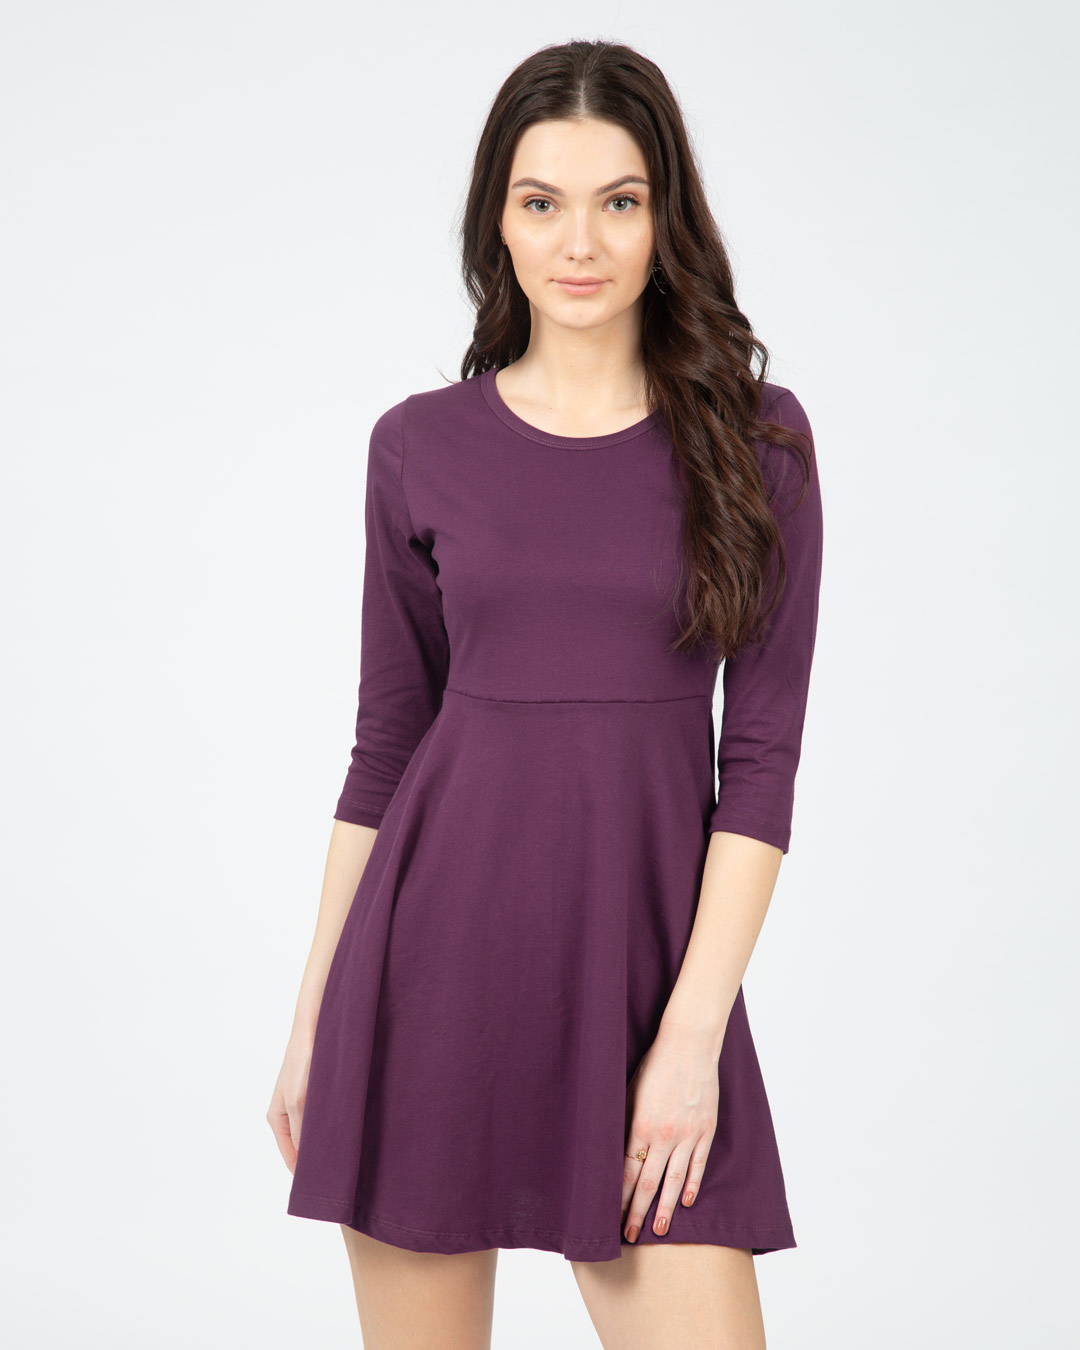 Buy Deep Purple Plain Flared Dress for Women purple Online at Bewakoof